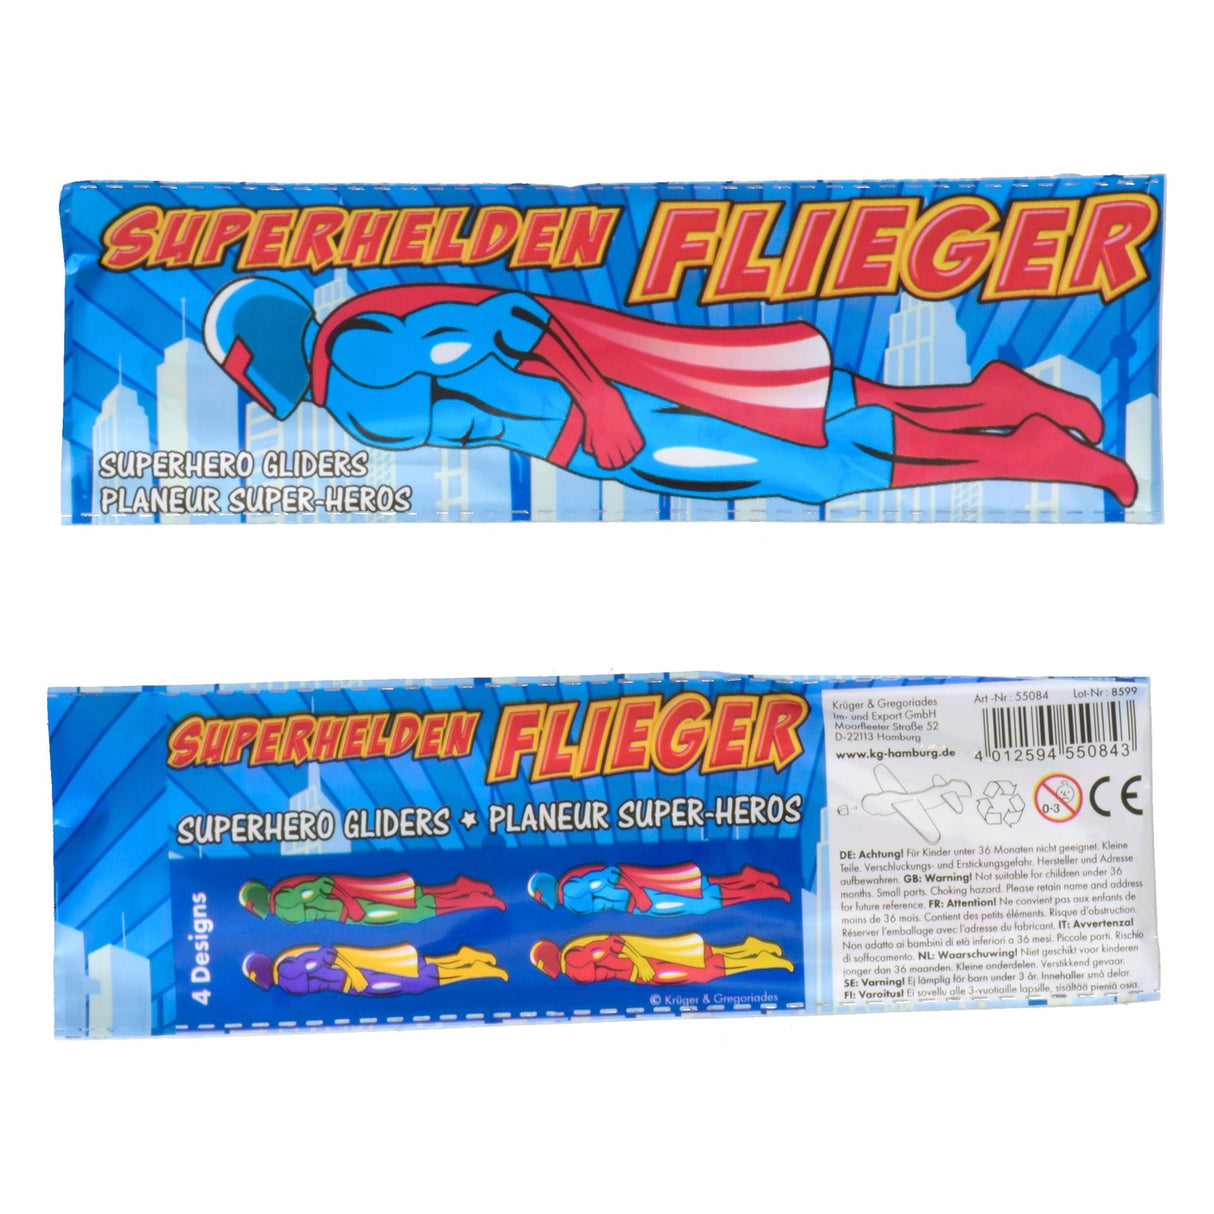 Styroporflieger Superheld Spielzeug in blau-rot